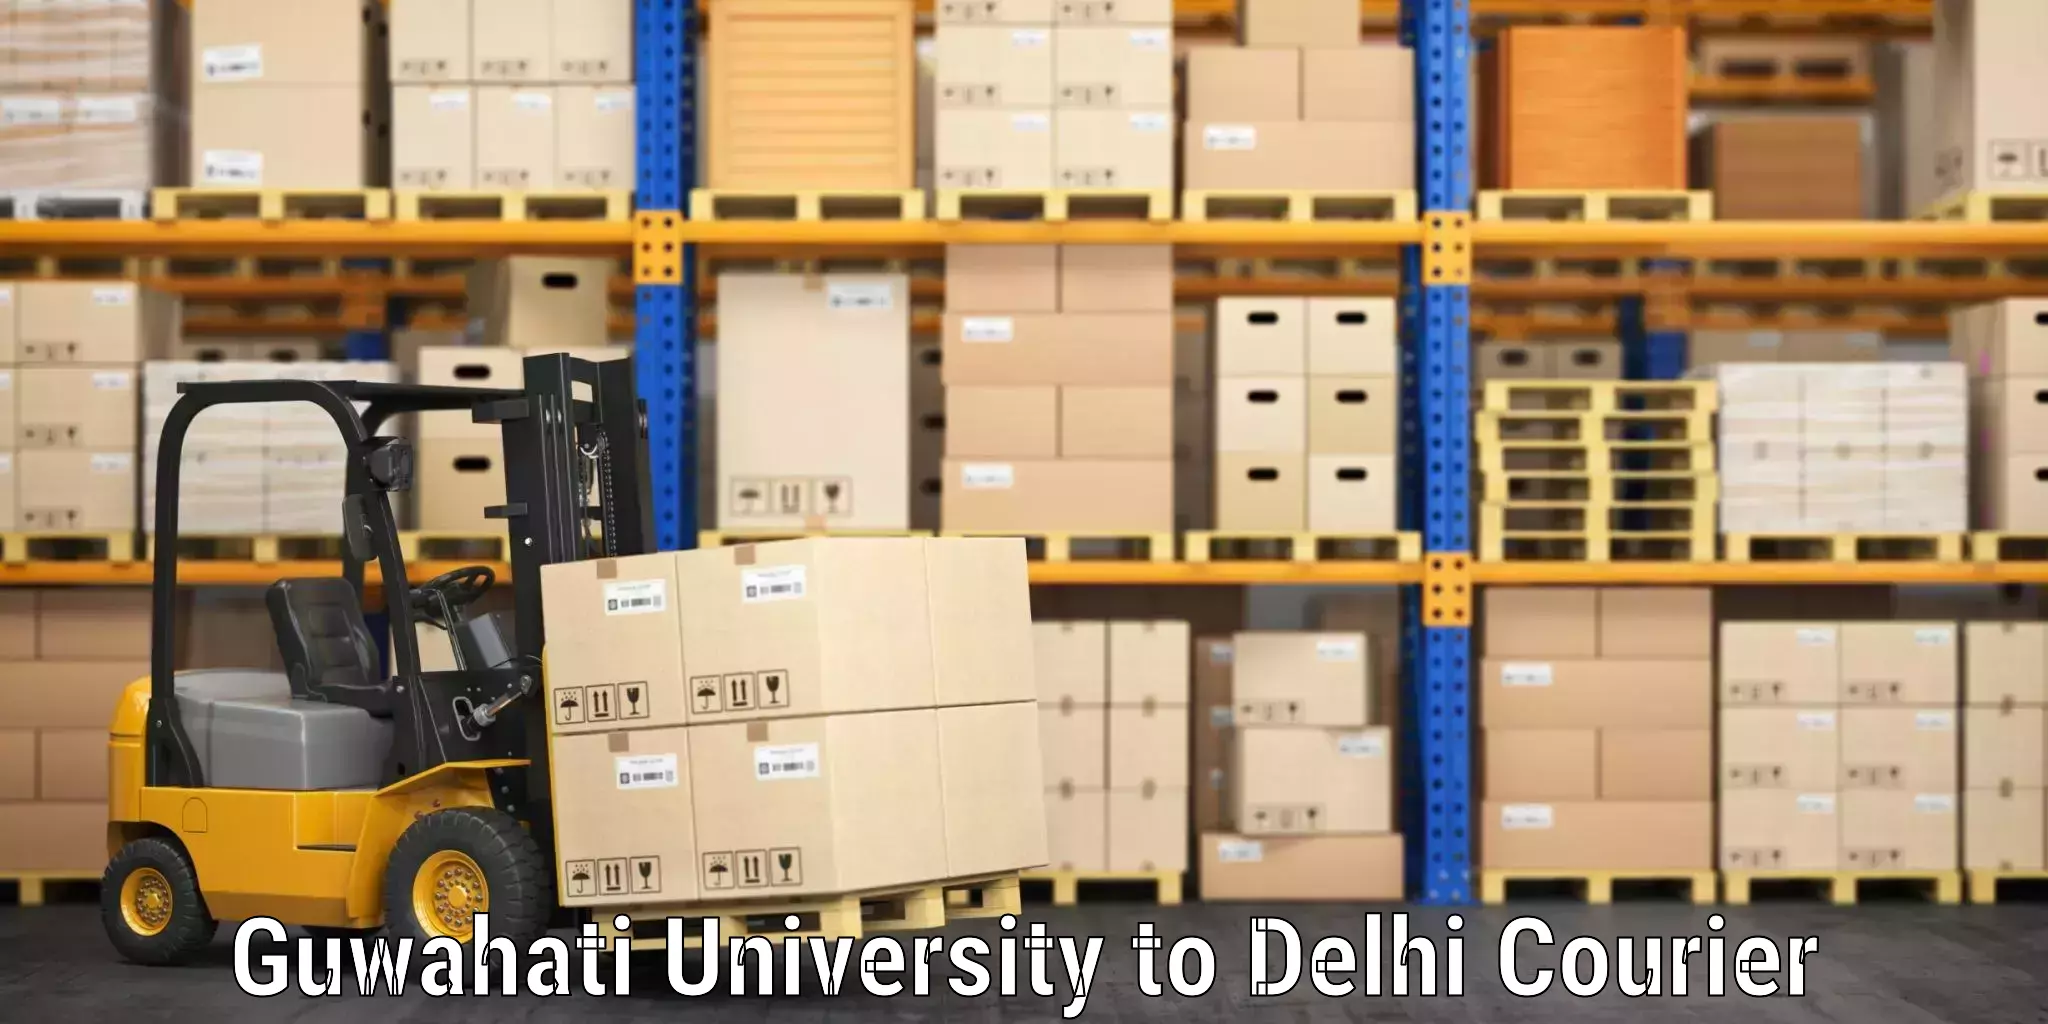 Luggage shipment tracking in Guwahati University to Delhi